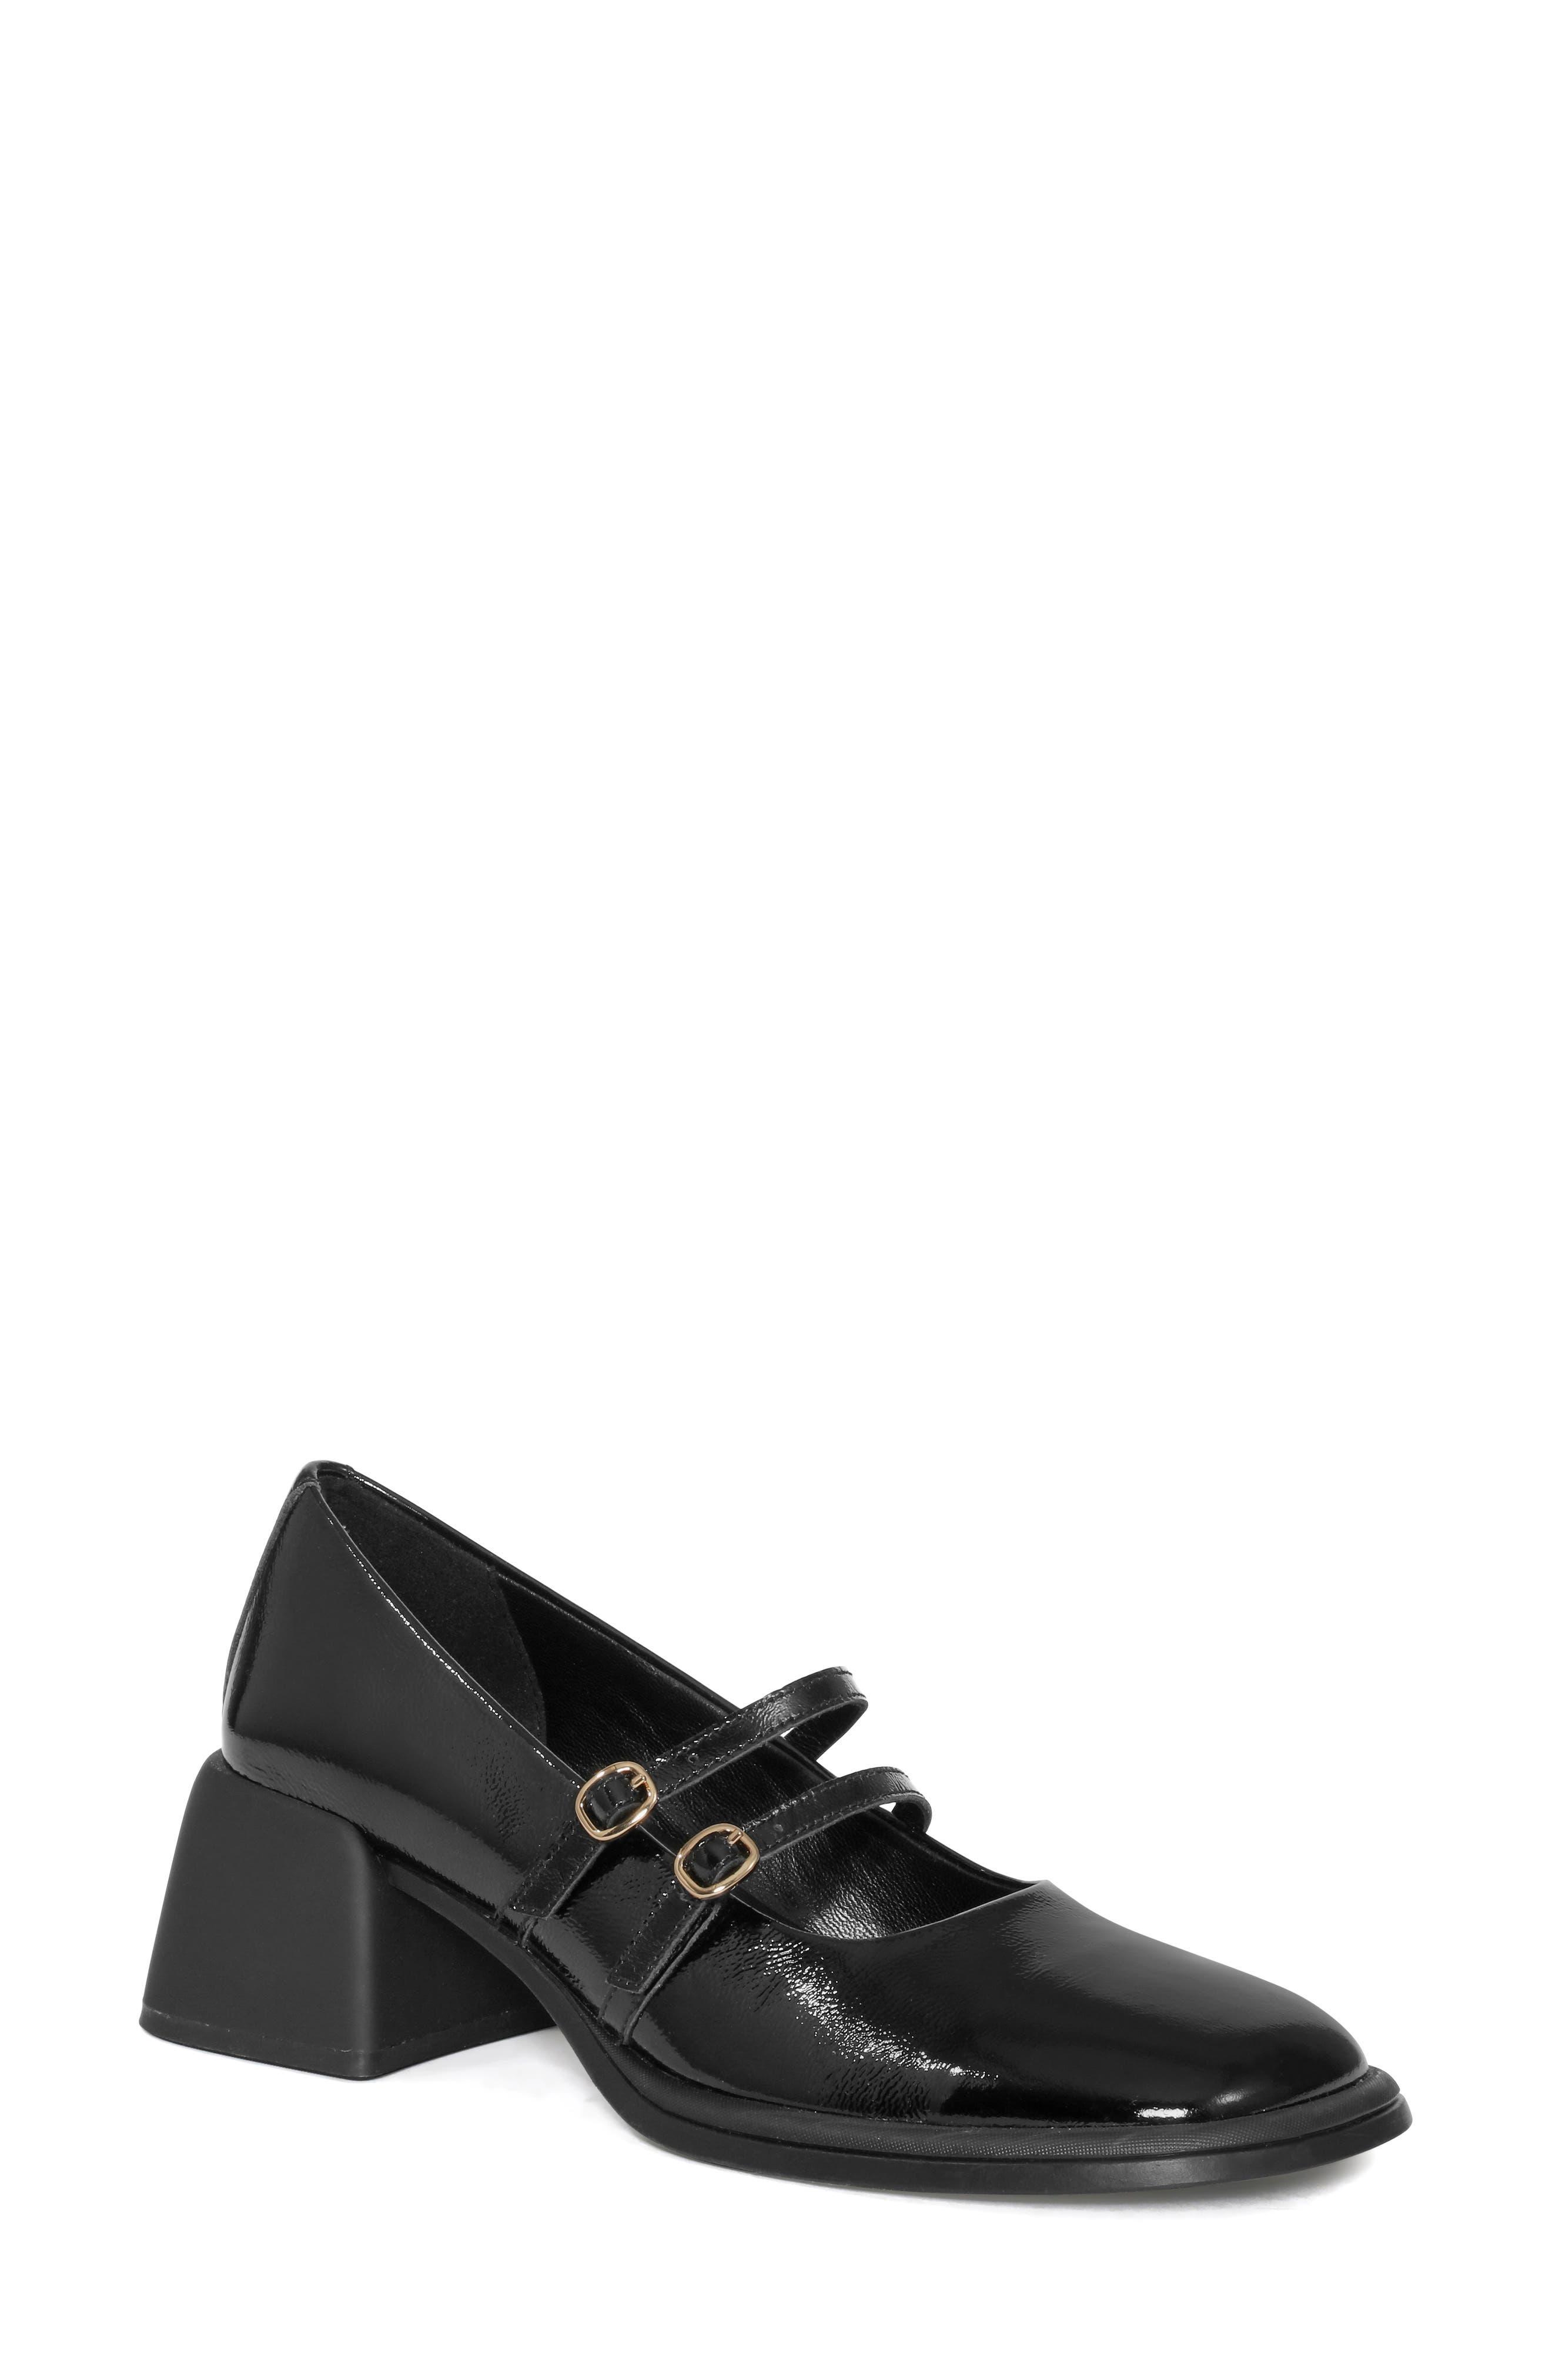 Vagabond Shoemakers Ansie Mary Jane Pump in Black | Lyst